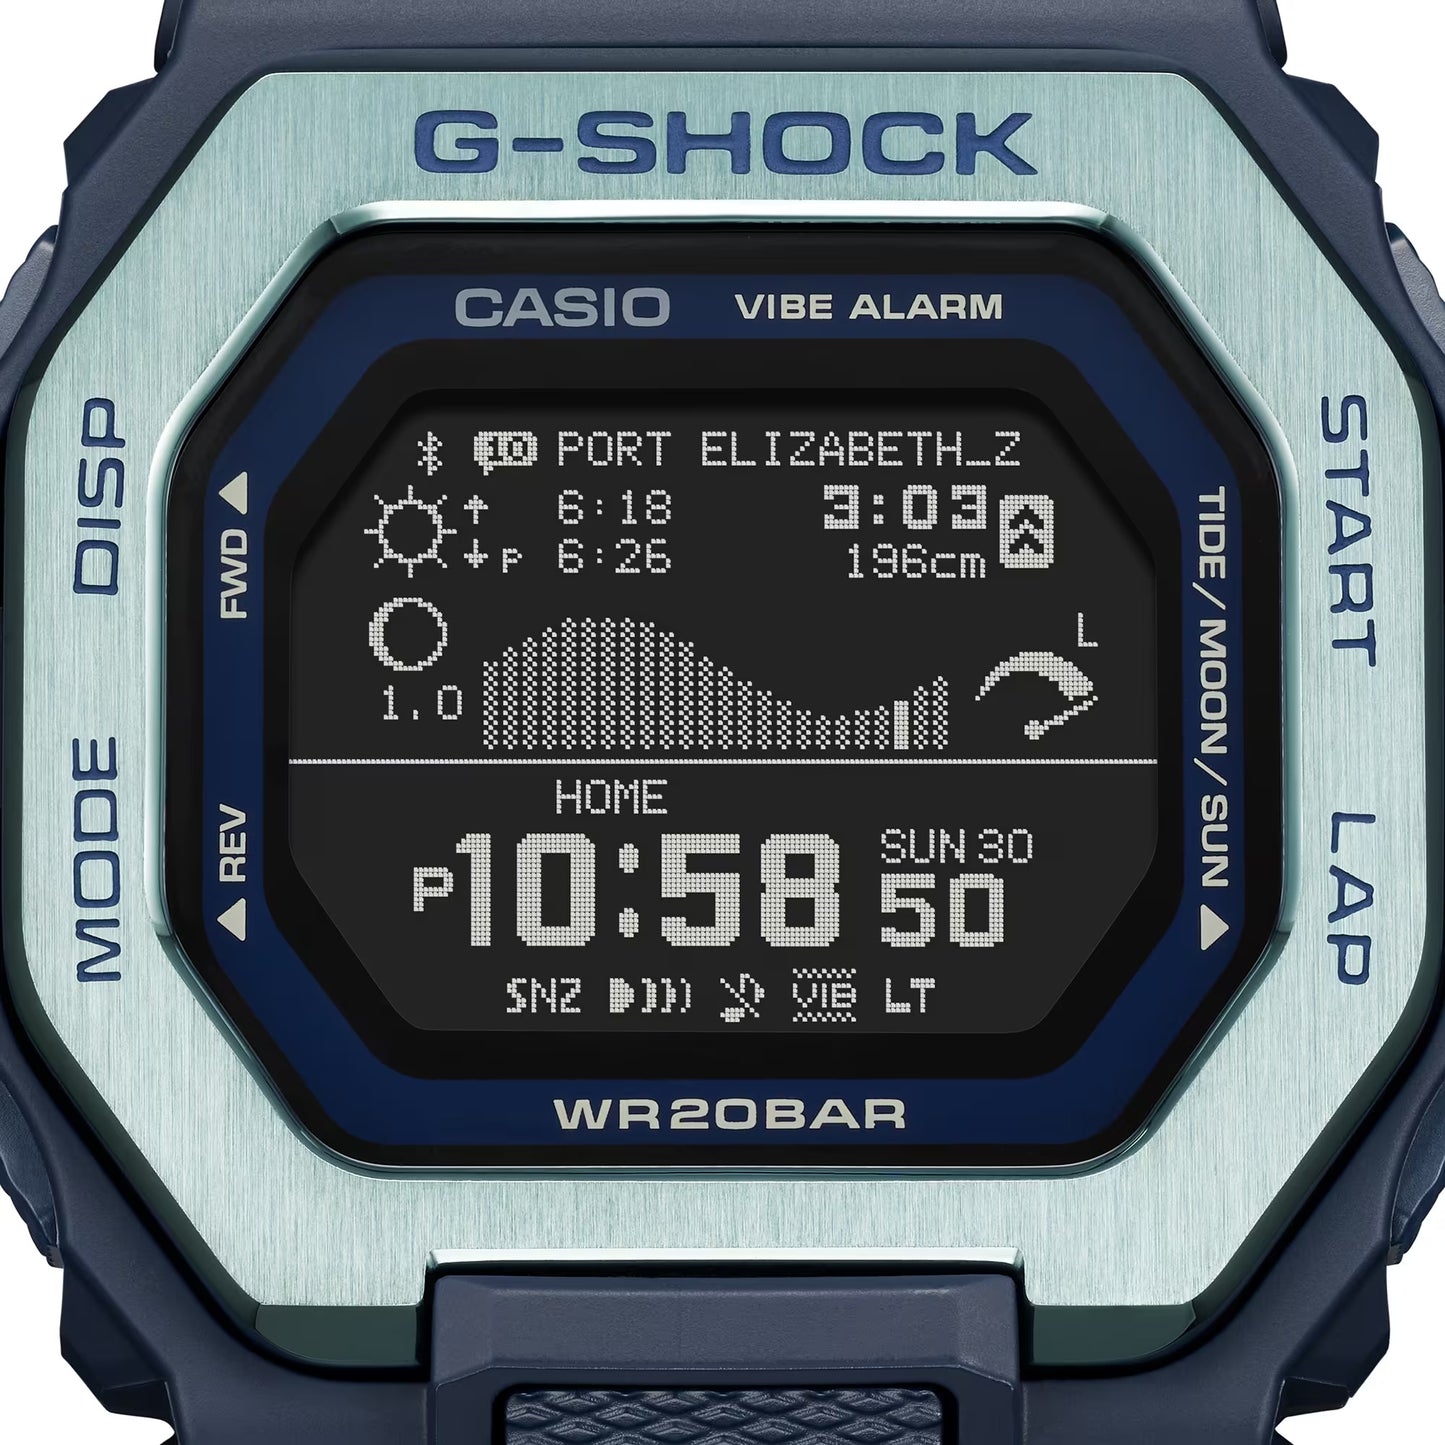 CASIO G-SHOCK GBX-100TT-2 G-LIDE BLUETOOTH BLUE TAN DIGITAL WATCH